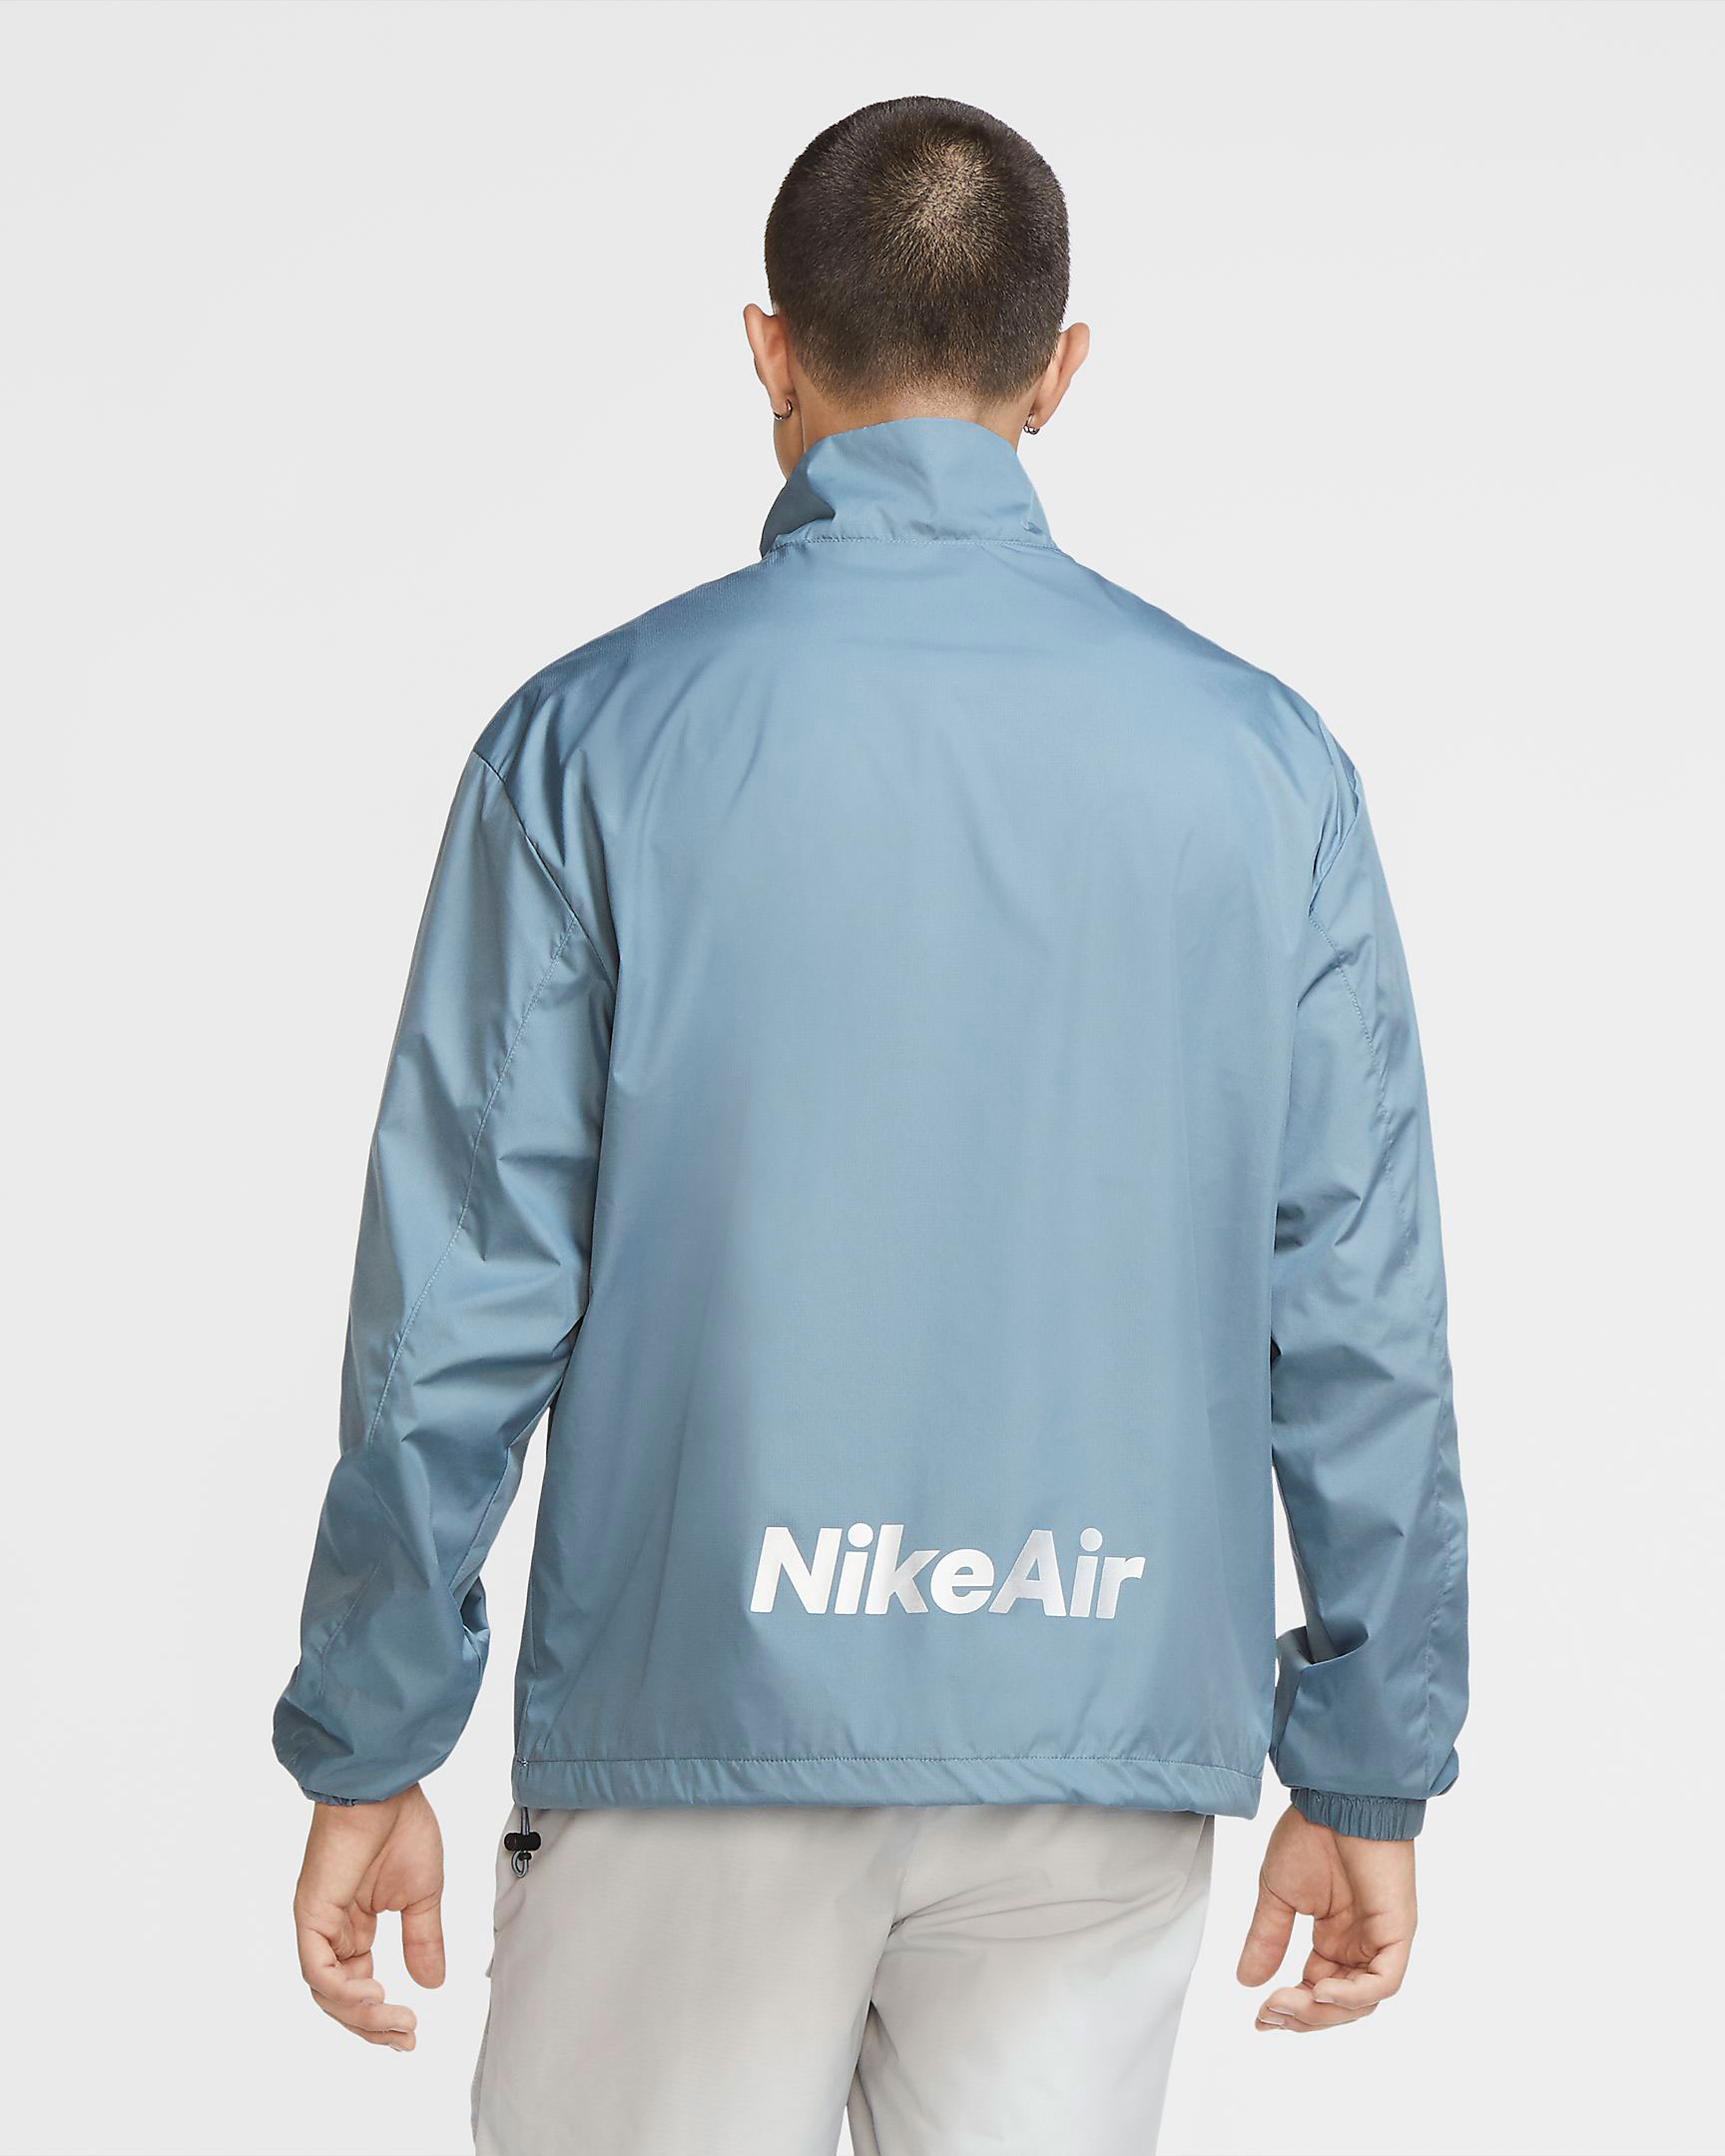 nike-air-utility-reflective-jacket-blue-2